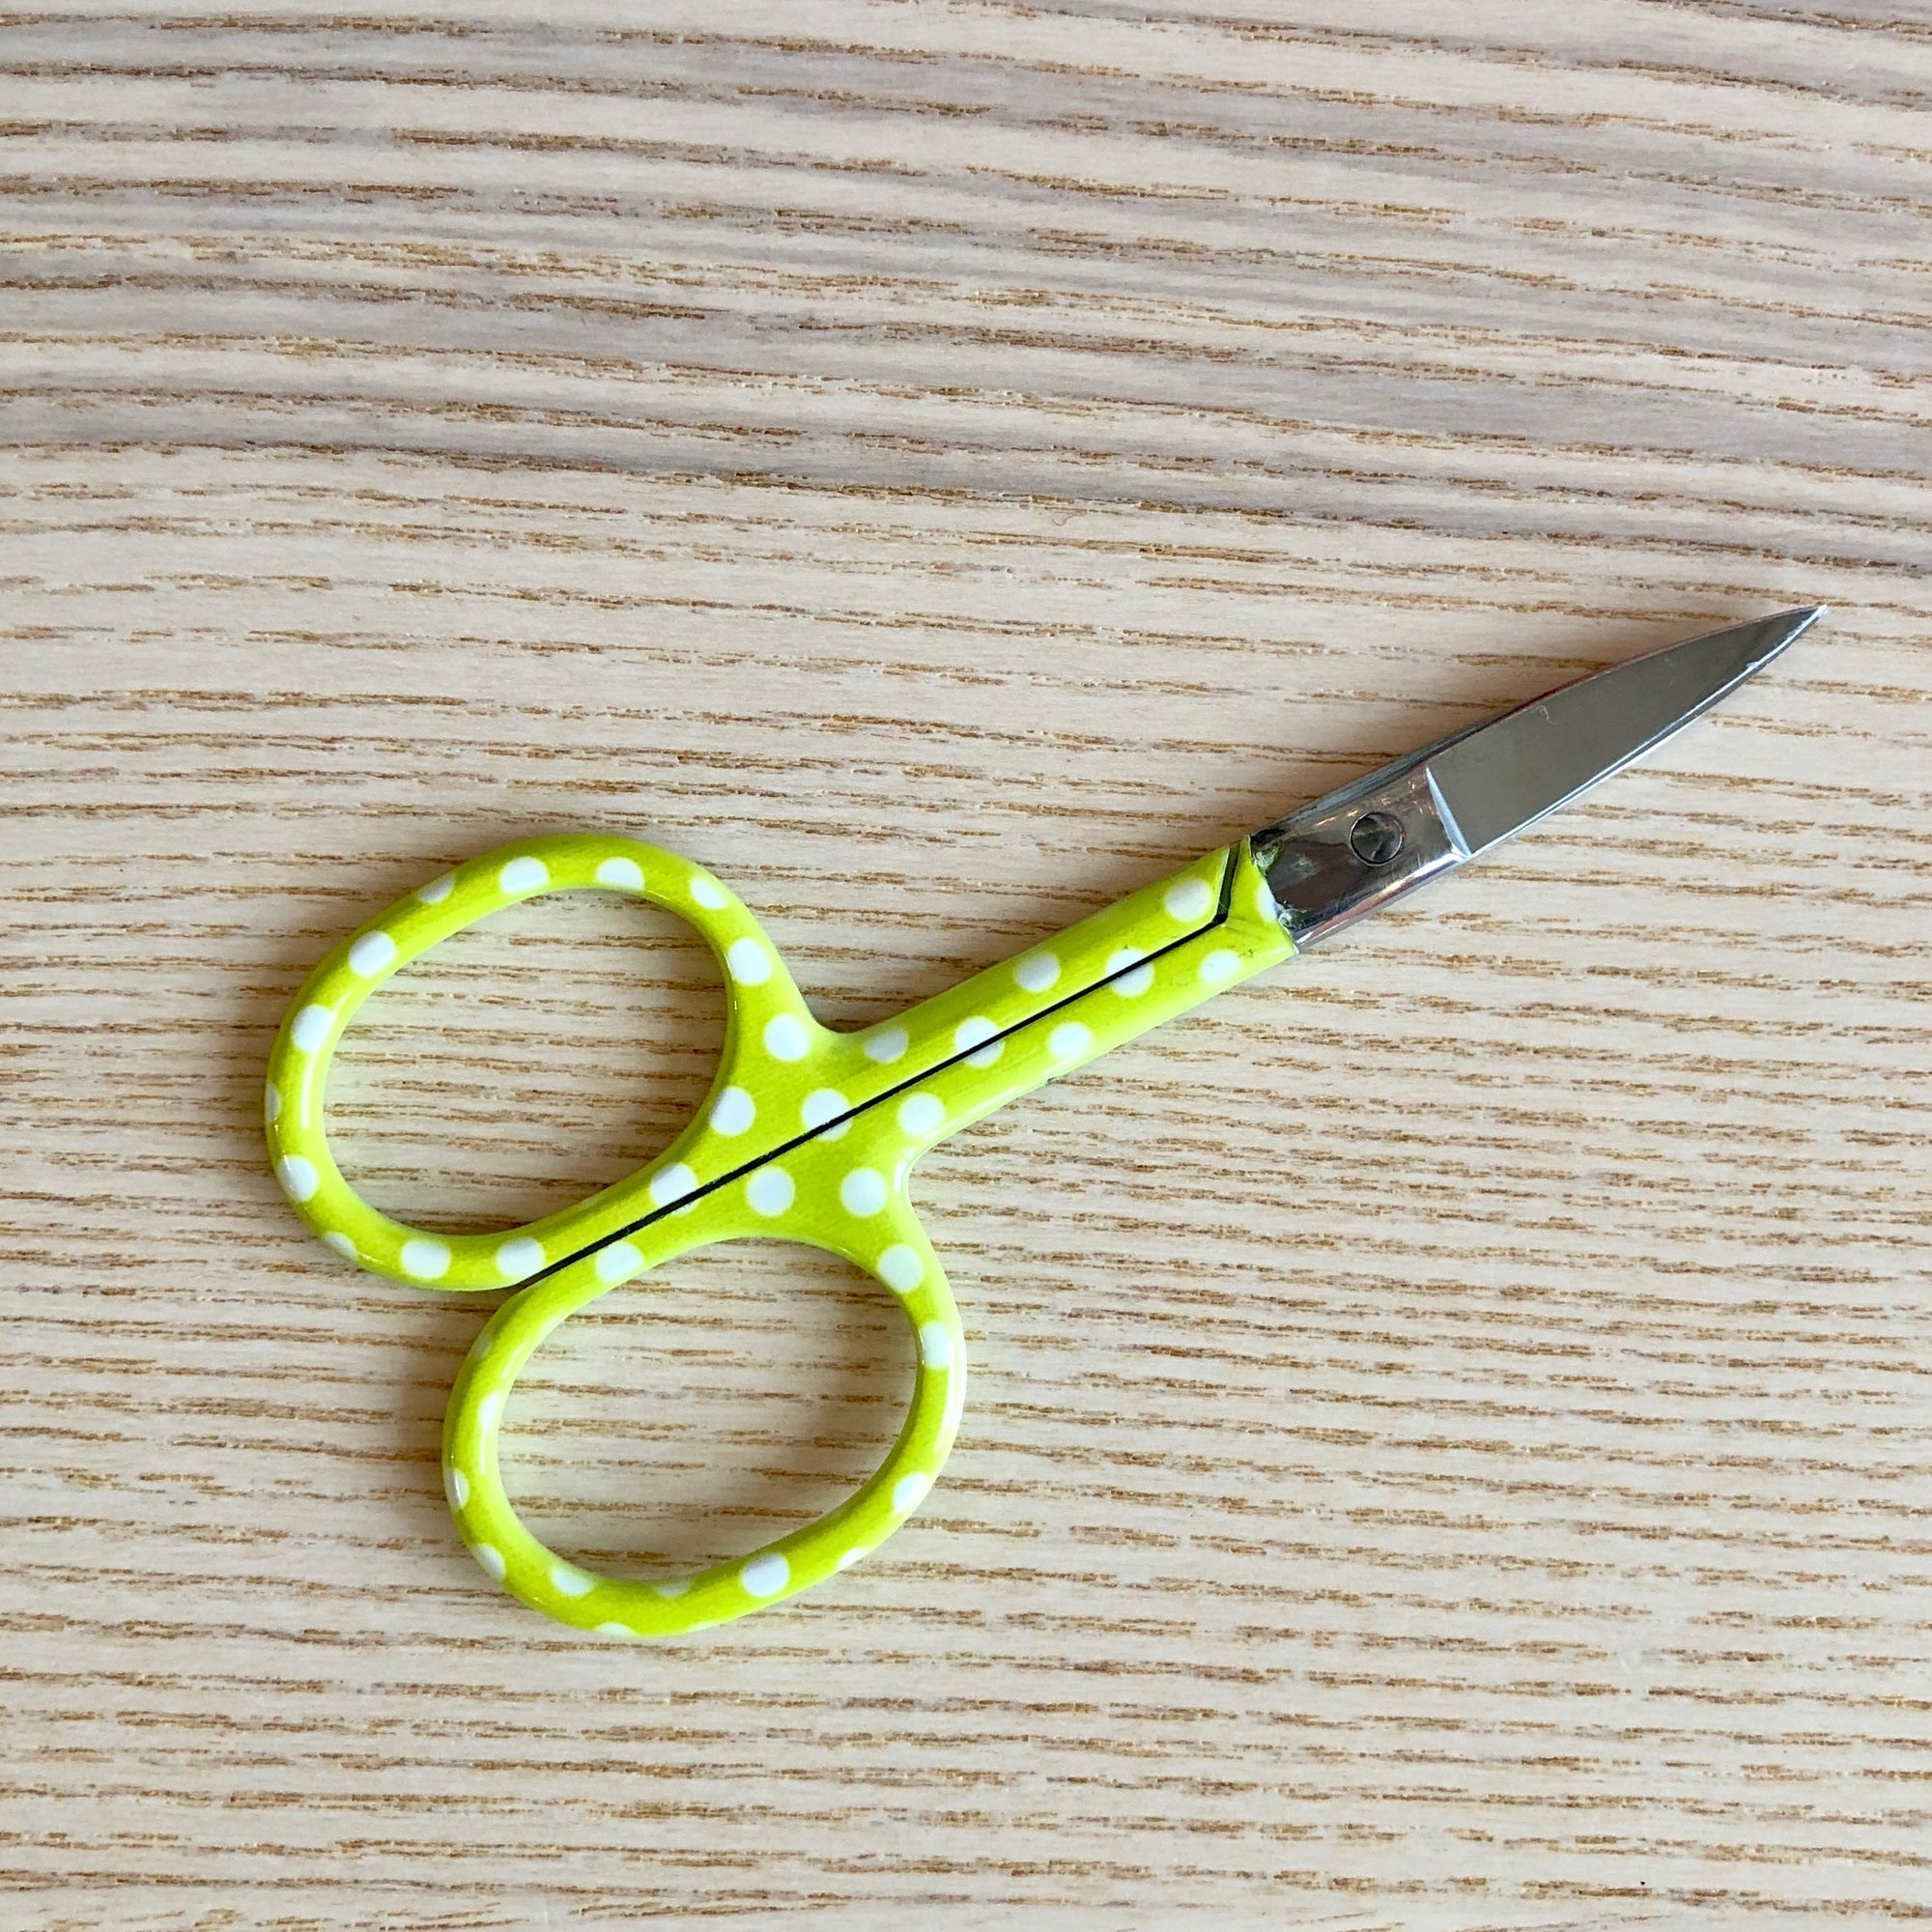 Polka Dot Embroidery Scissors